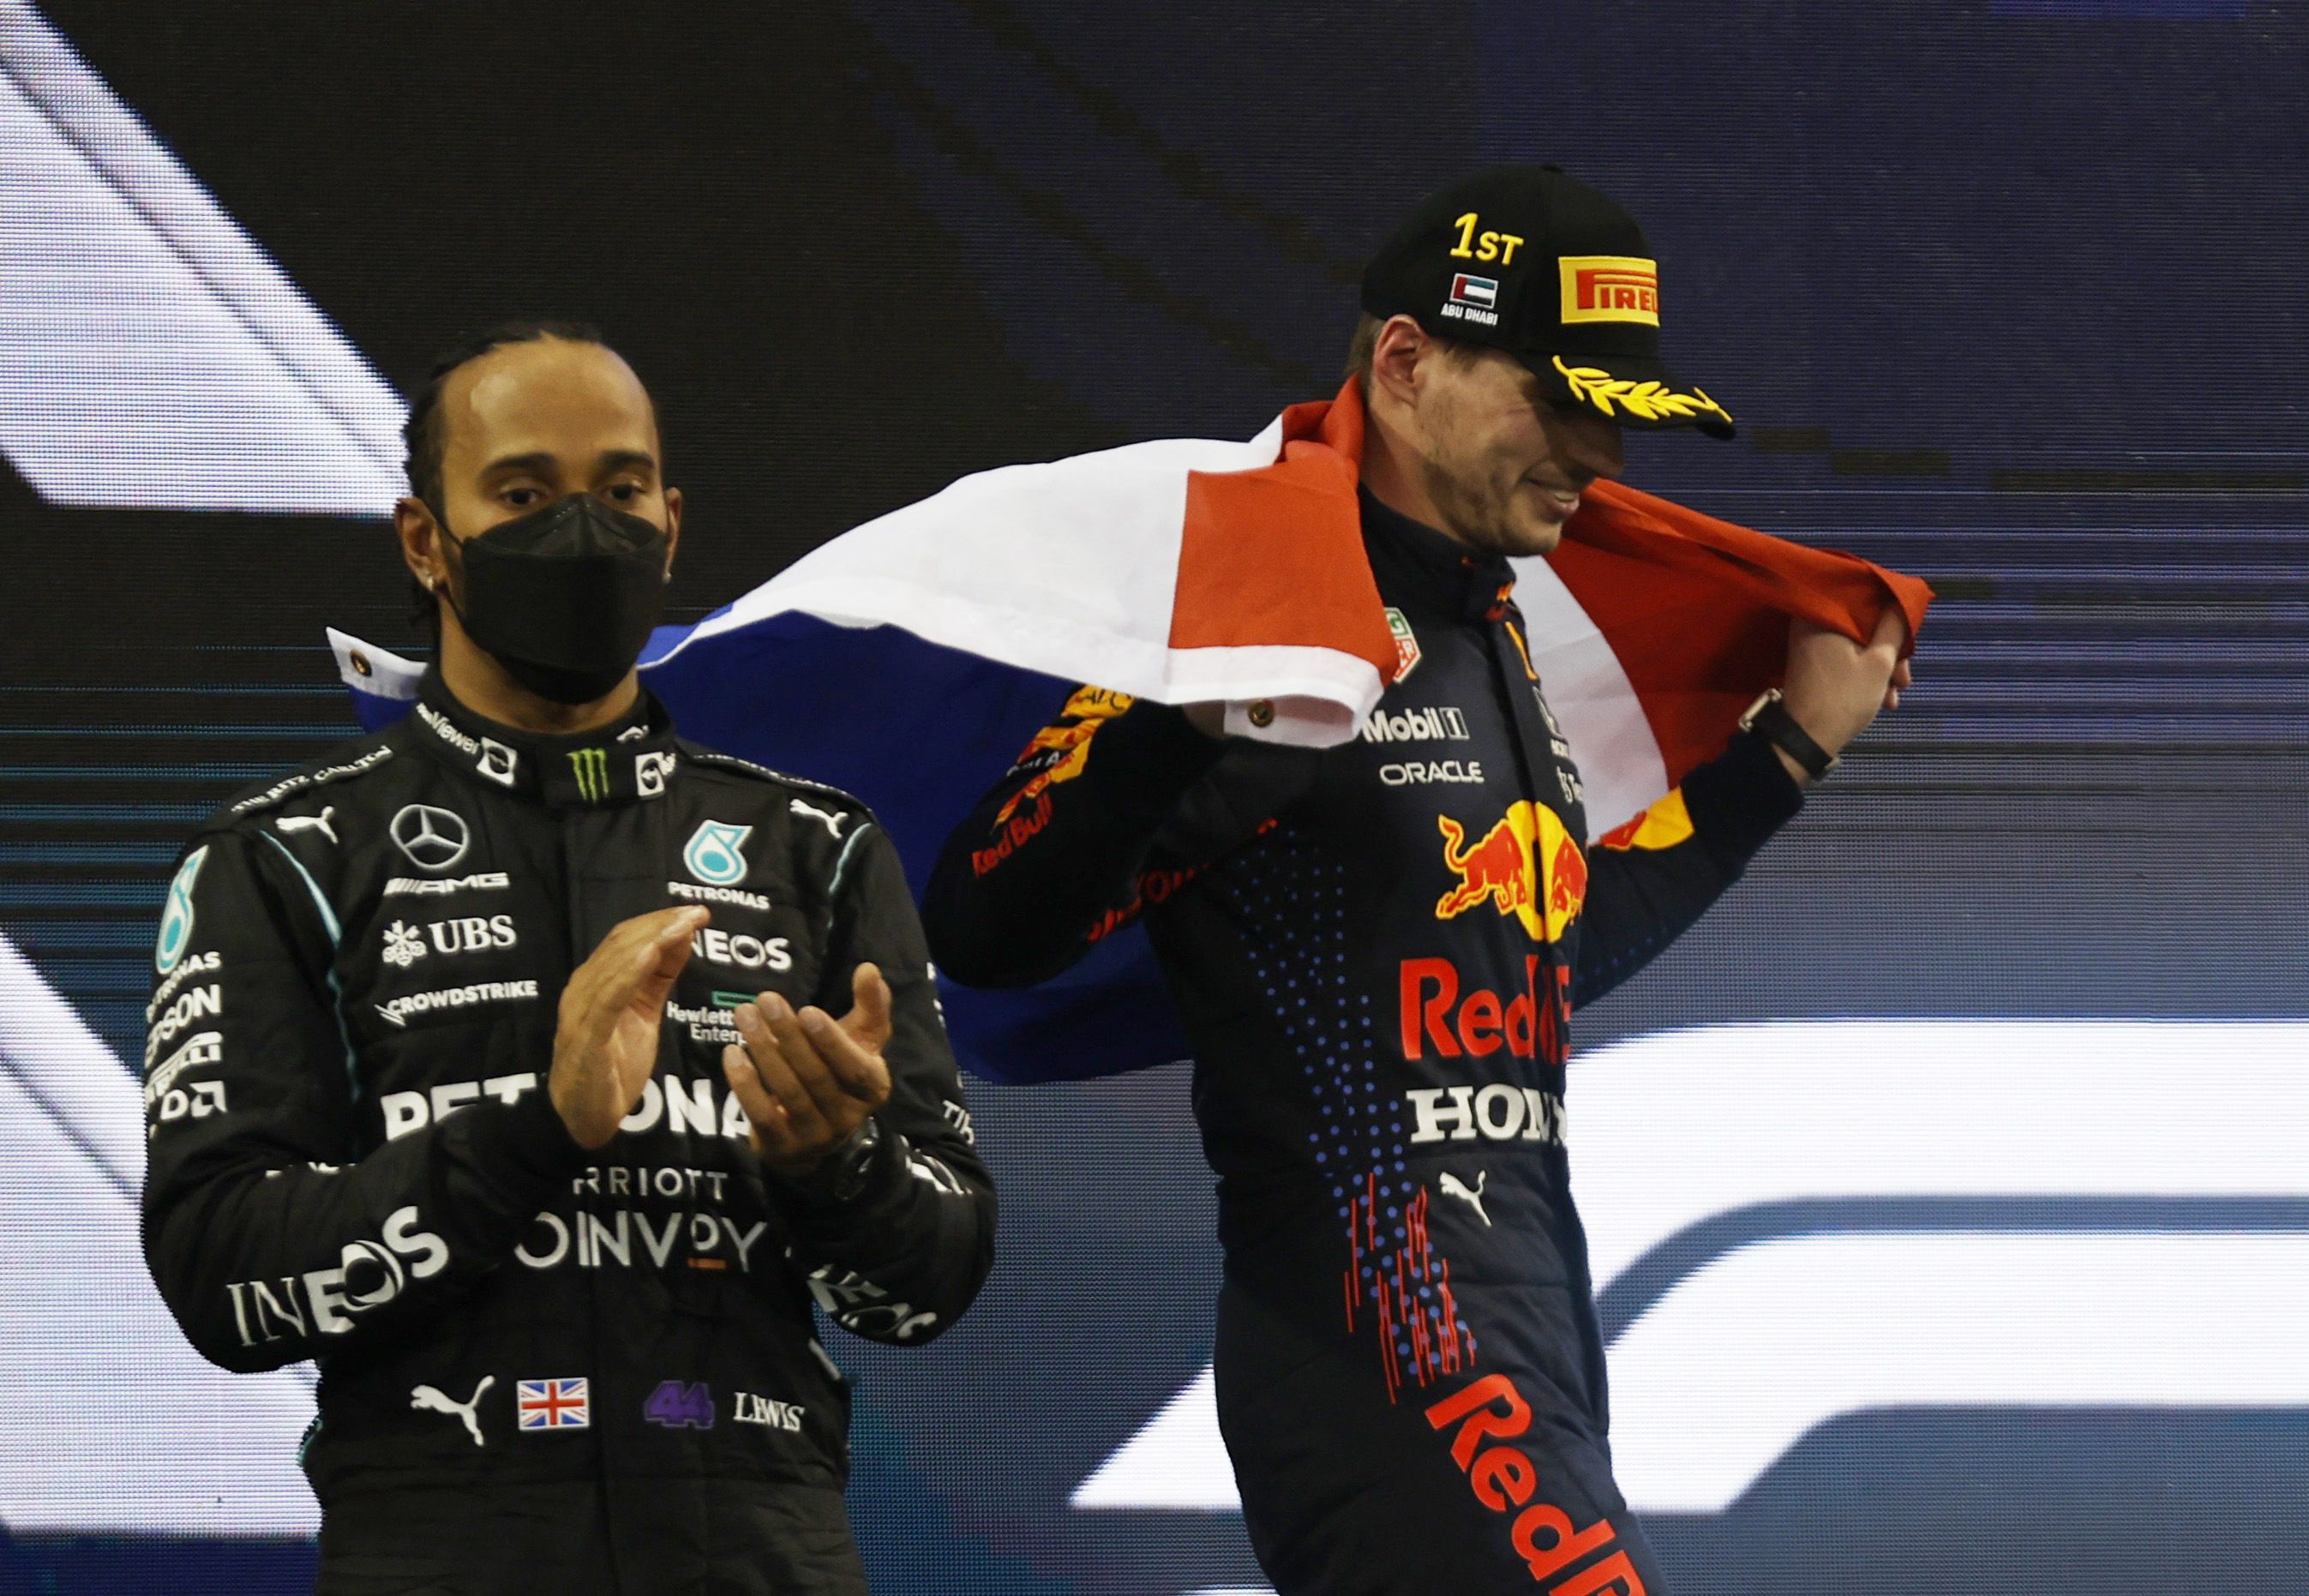 Hamilton congratulated Verstappen after his consecration